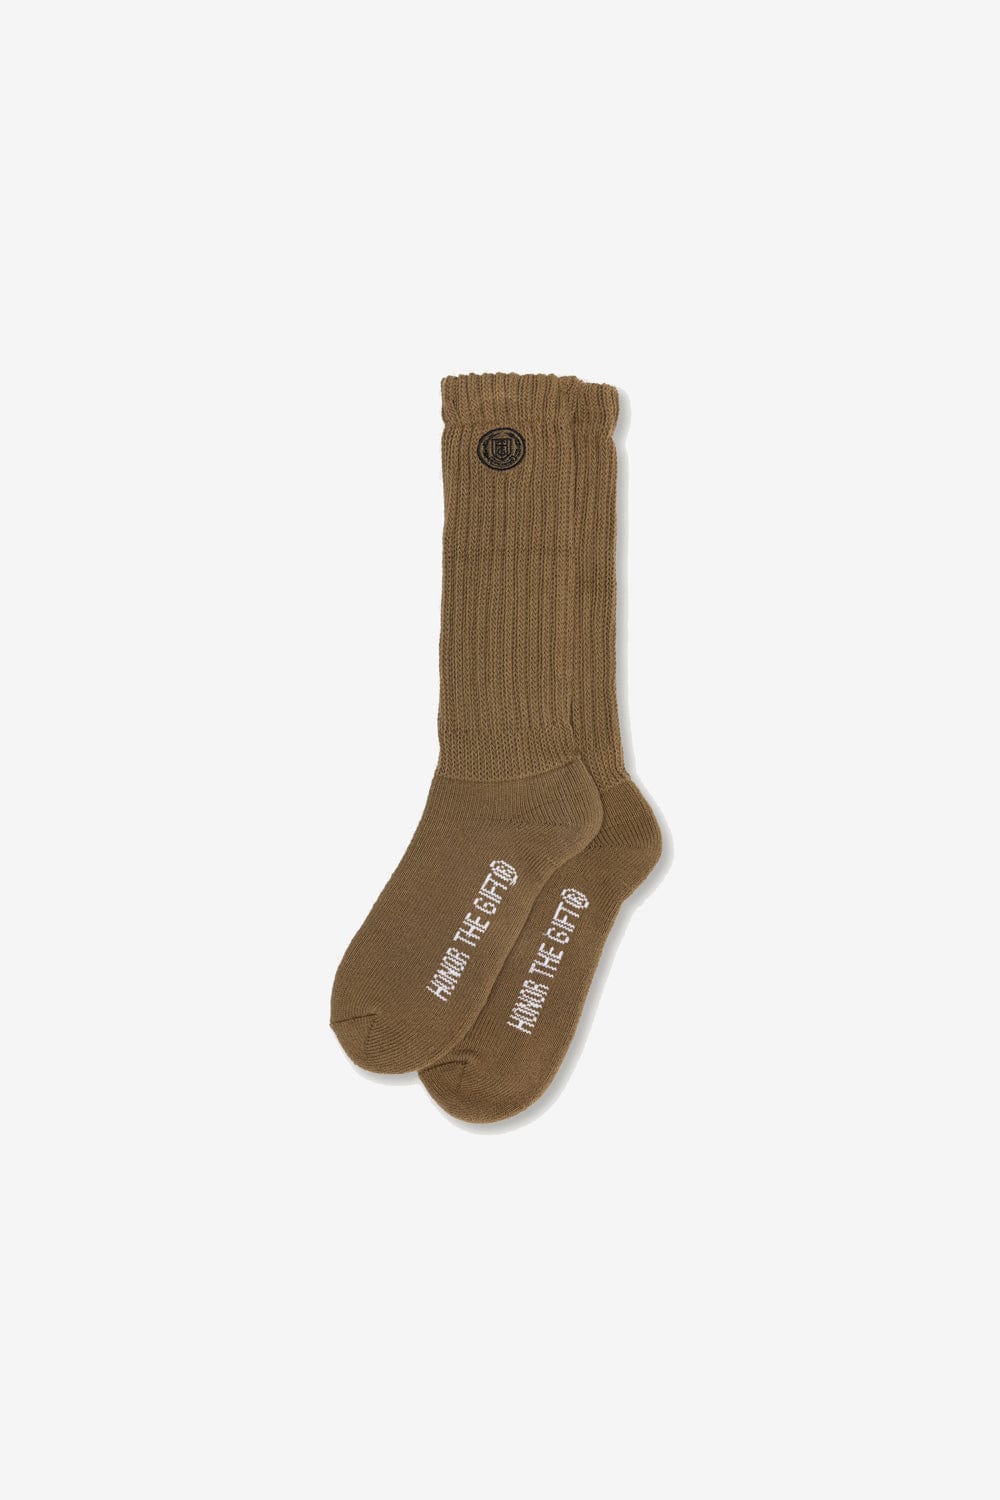 Honor The Gift Slouch HTG Socks (Olive)